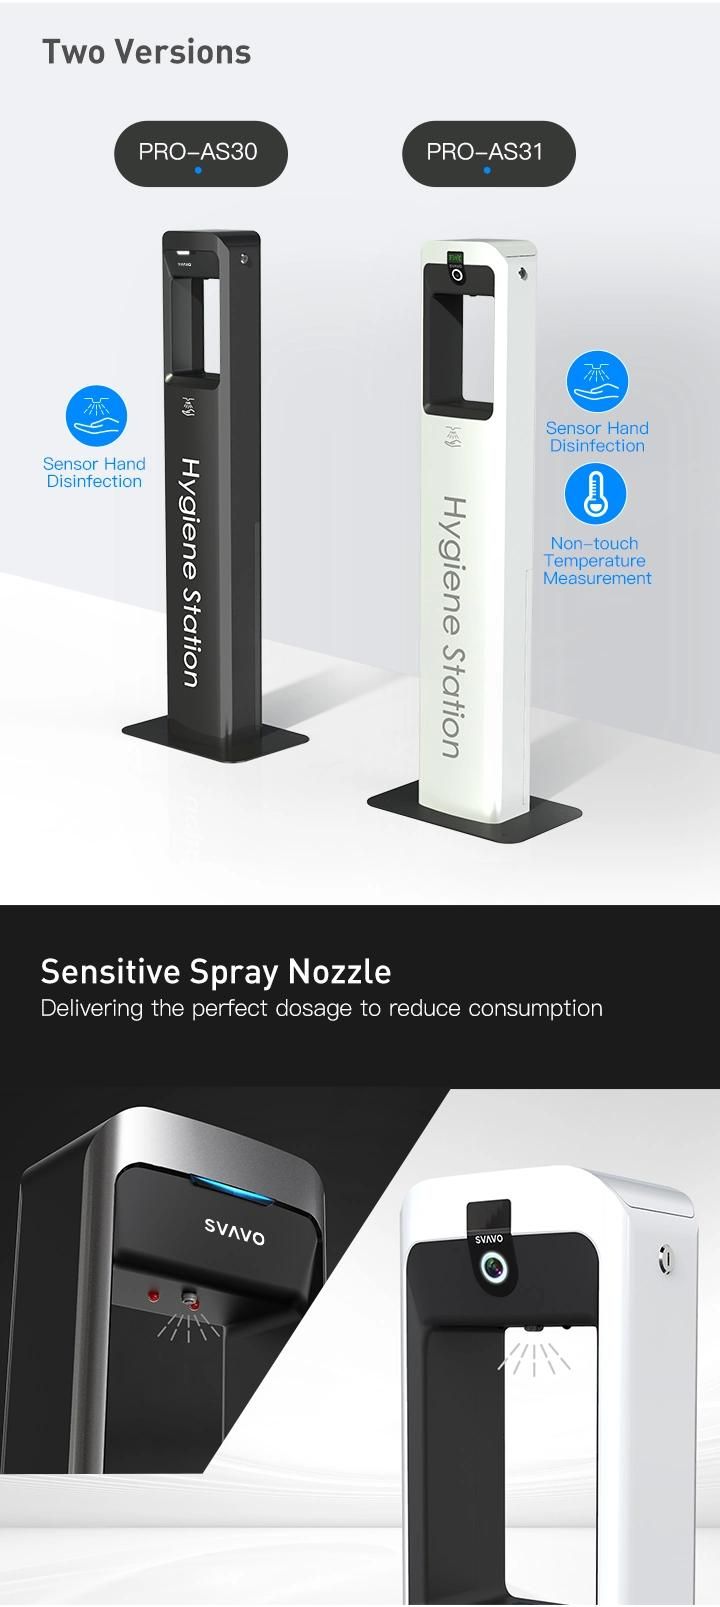 Automatic Soap Dispenser Premium 5L for Public Battery Operated